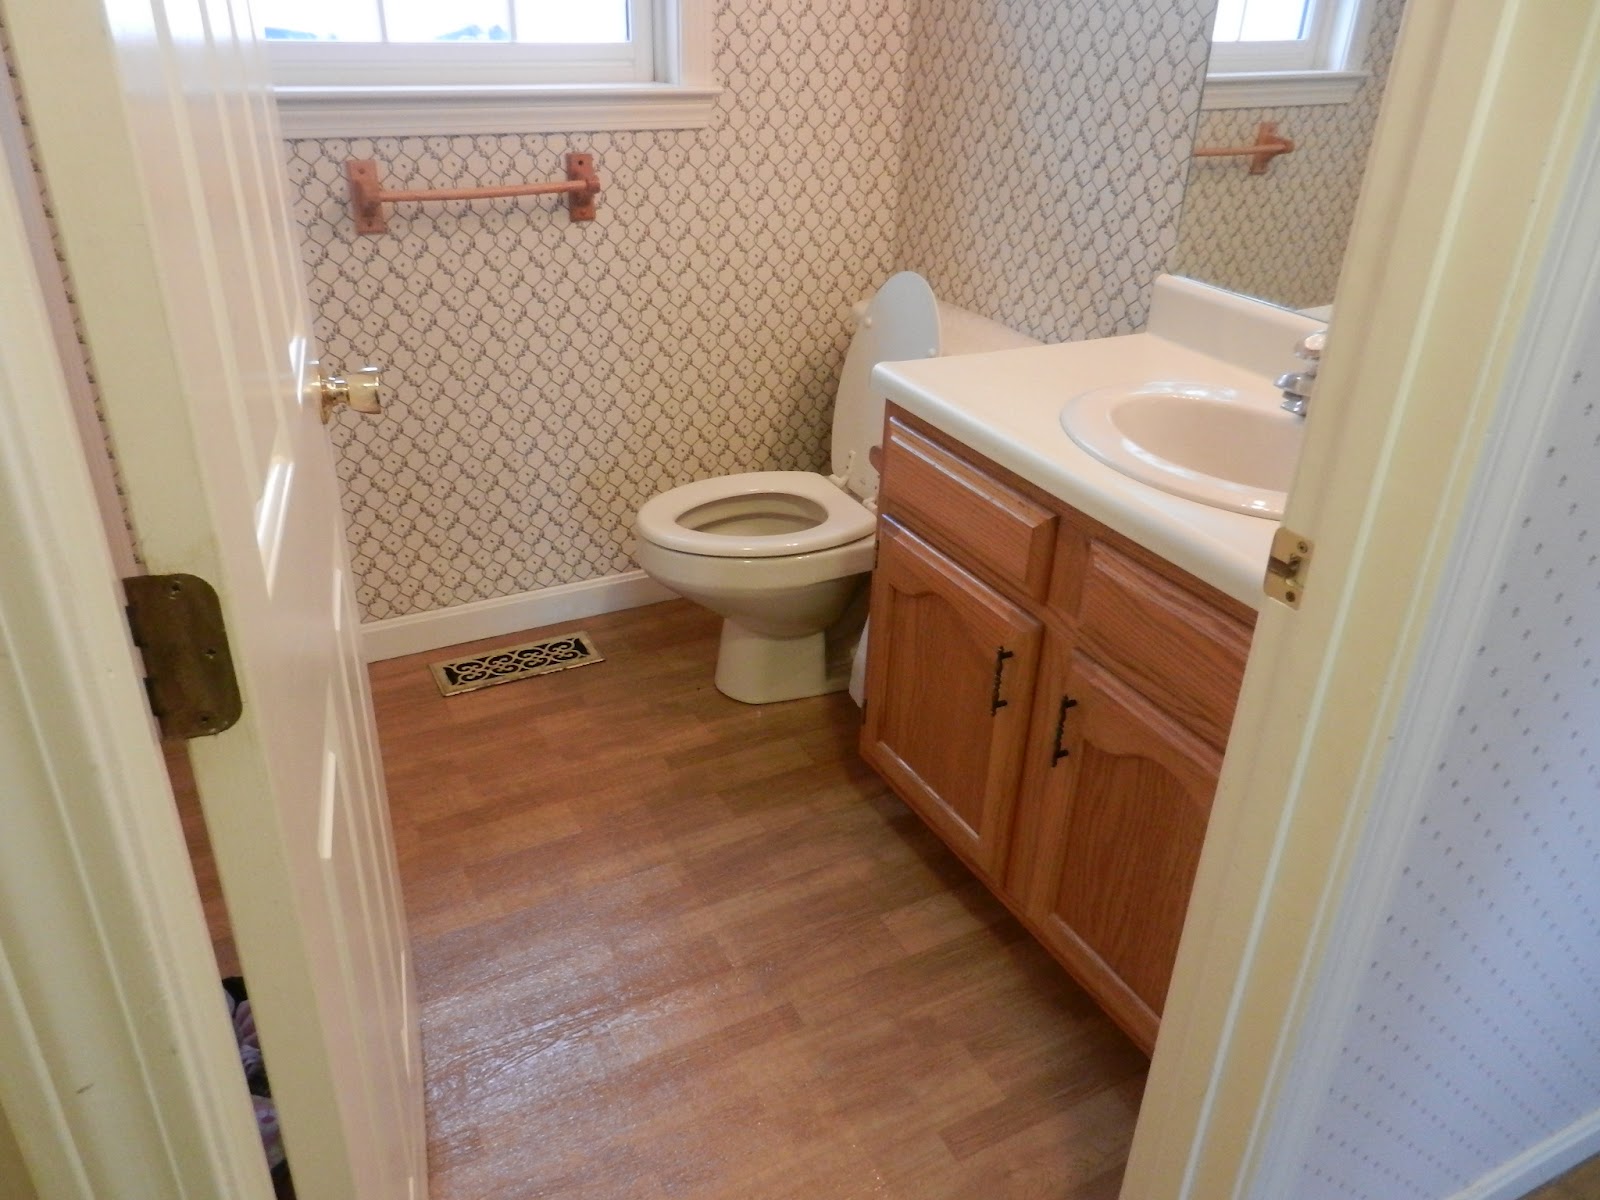 Our House: First Floor Bathroom/Laundry deconstruct